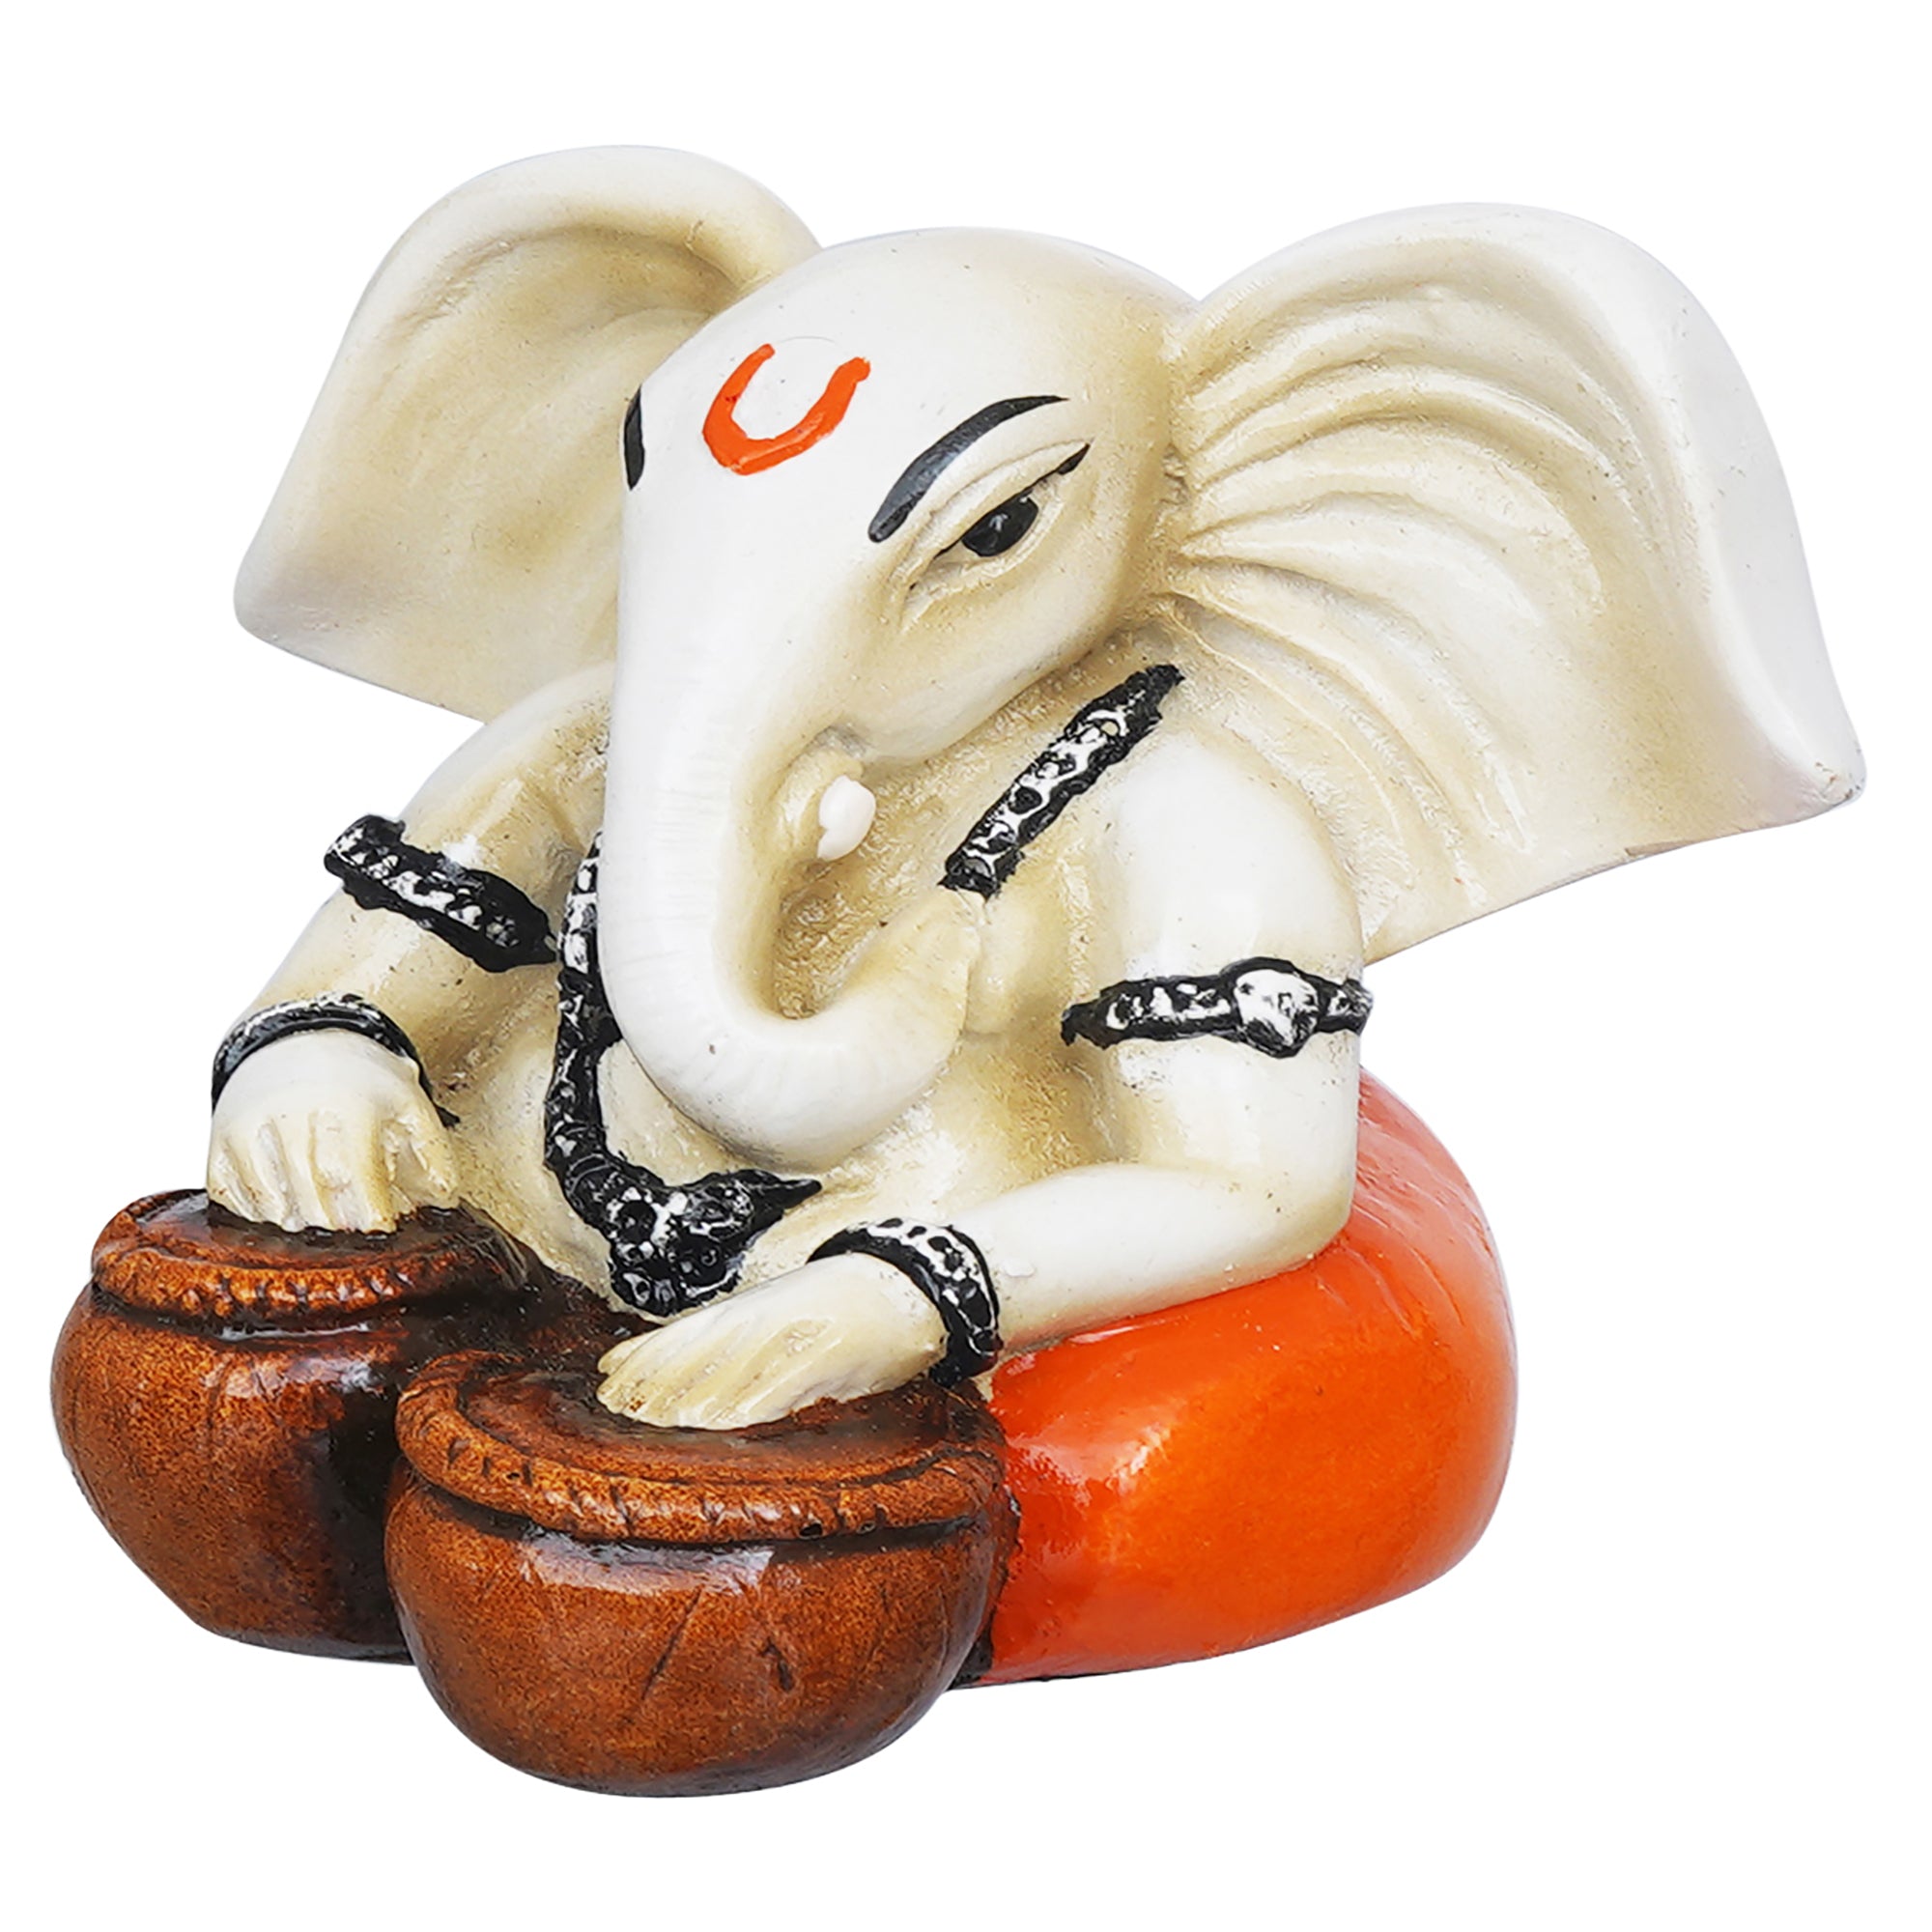 eCraftIndia White & Orange Polyresin Handcrafted Lord Ganesha Idol Playing Tabla Musical Instrument 7